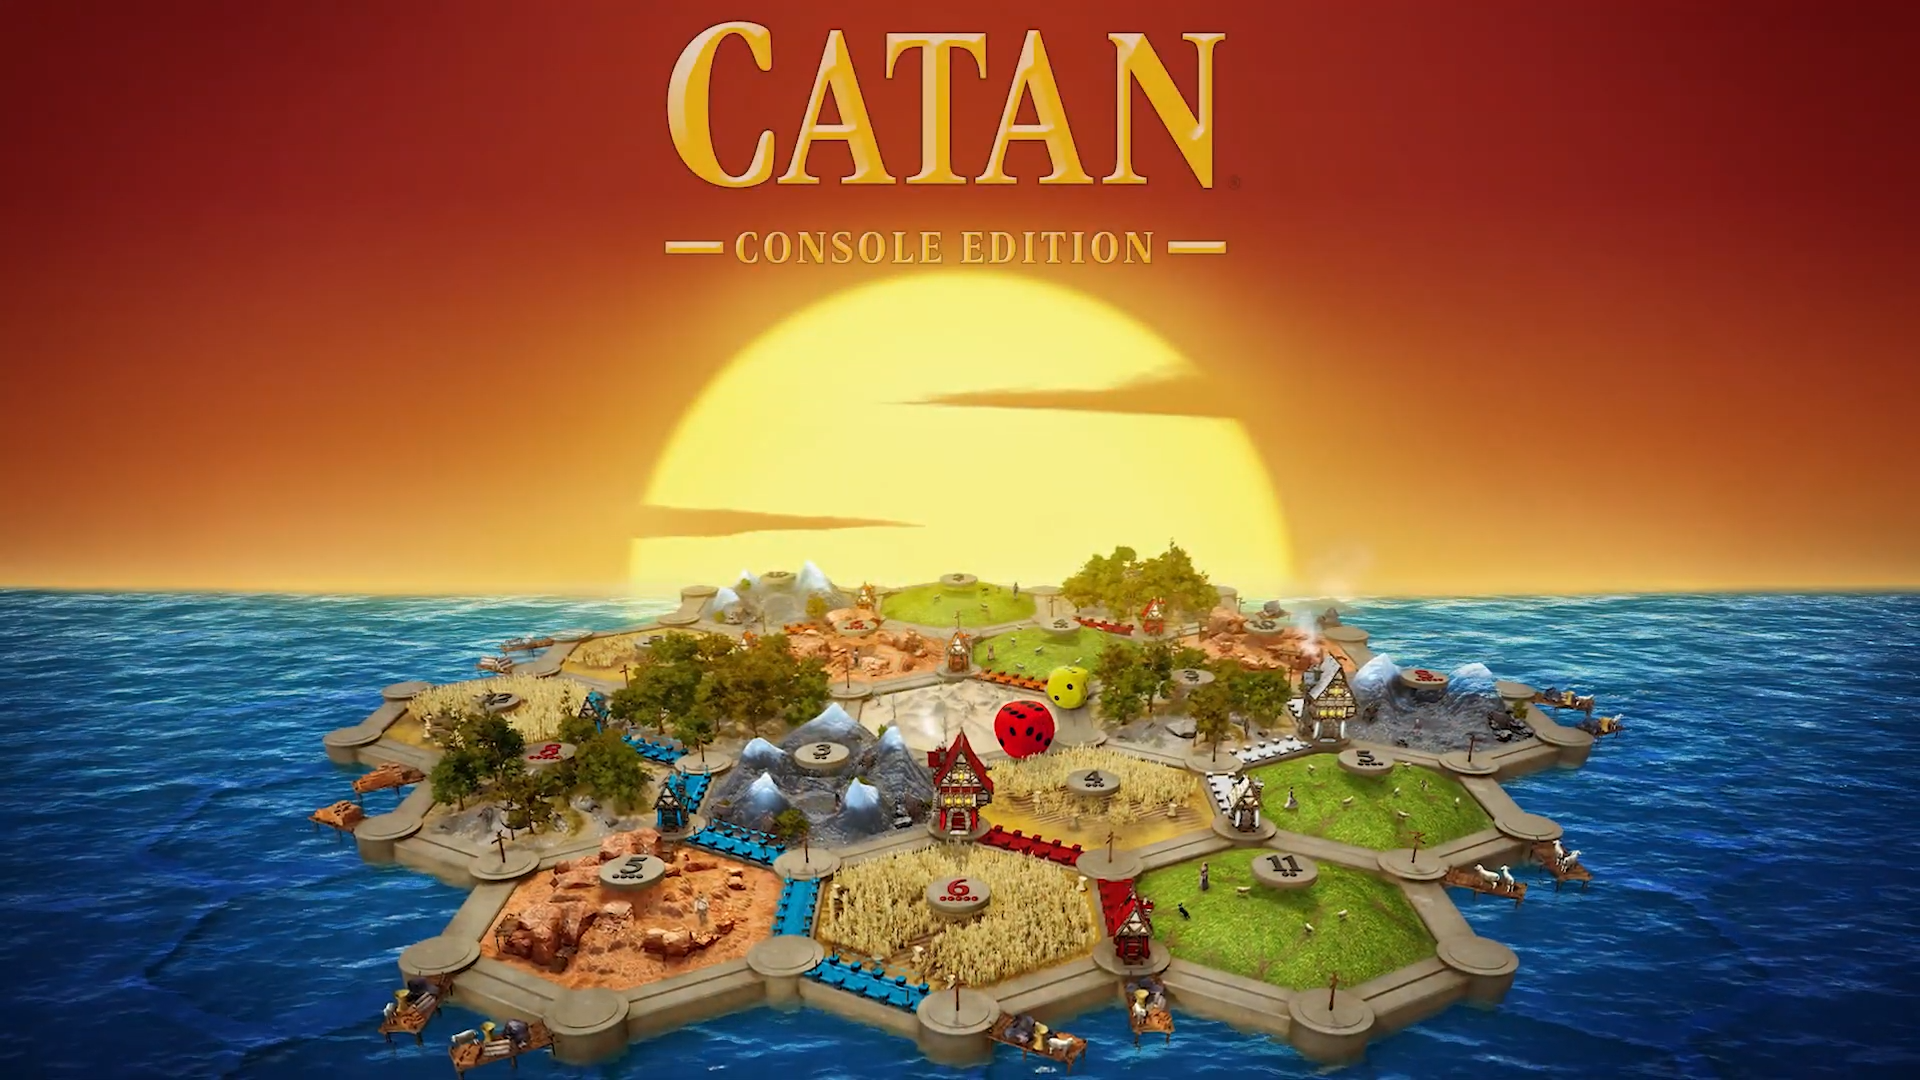 Catan console edition key art